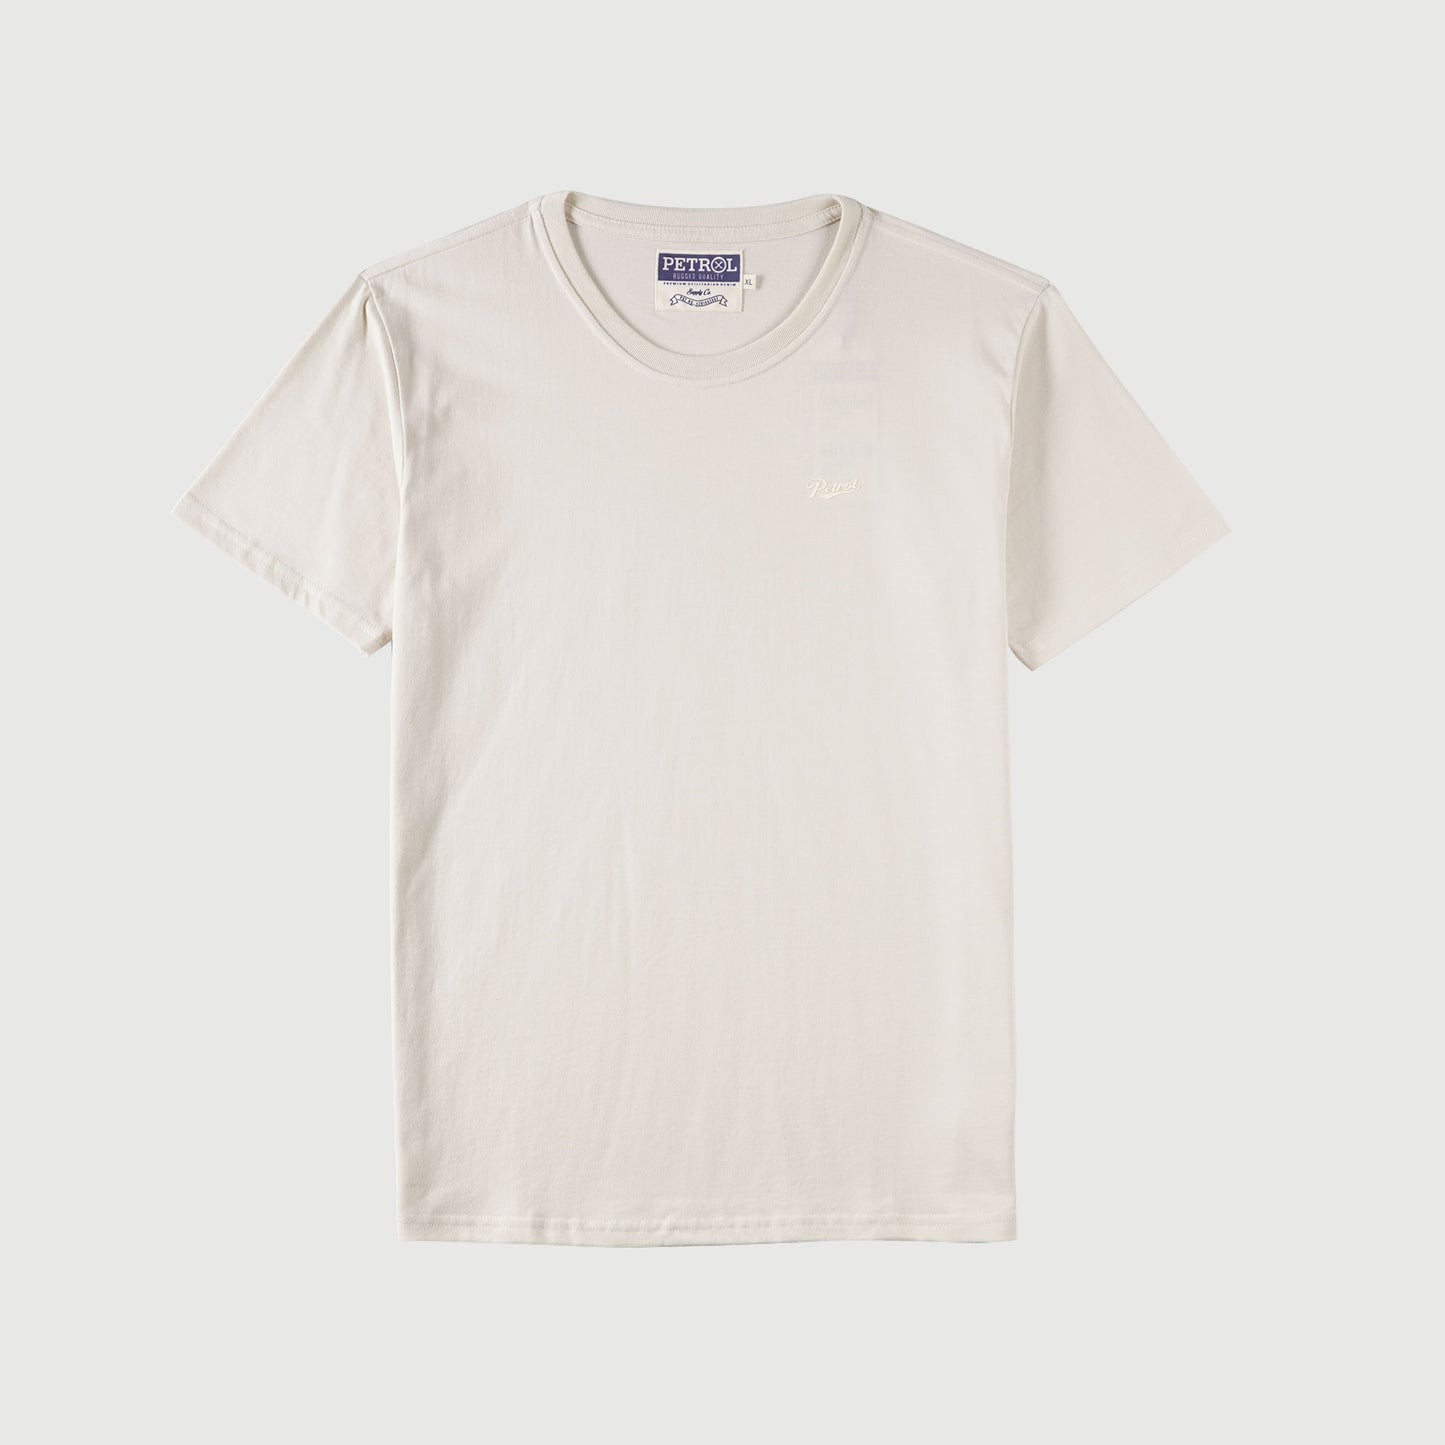 Petrol Basic Tees for Men Slim Fitting Shirt CVC Jersey Fabric Trendy fashion Casual Top T-shirt for Men 146950-U (Beige)